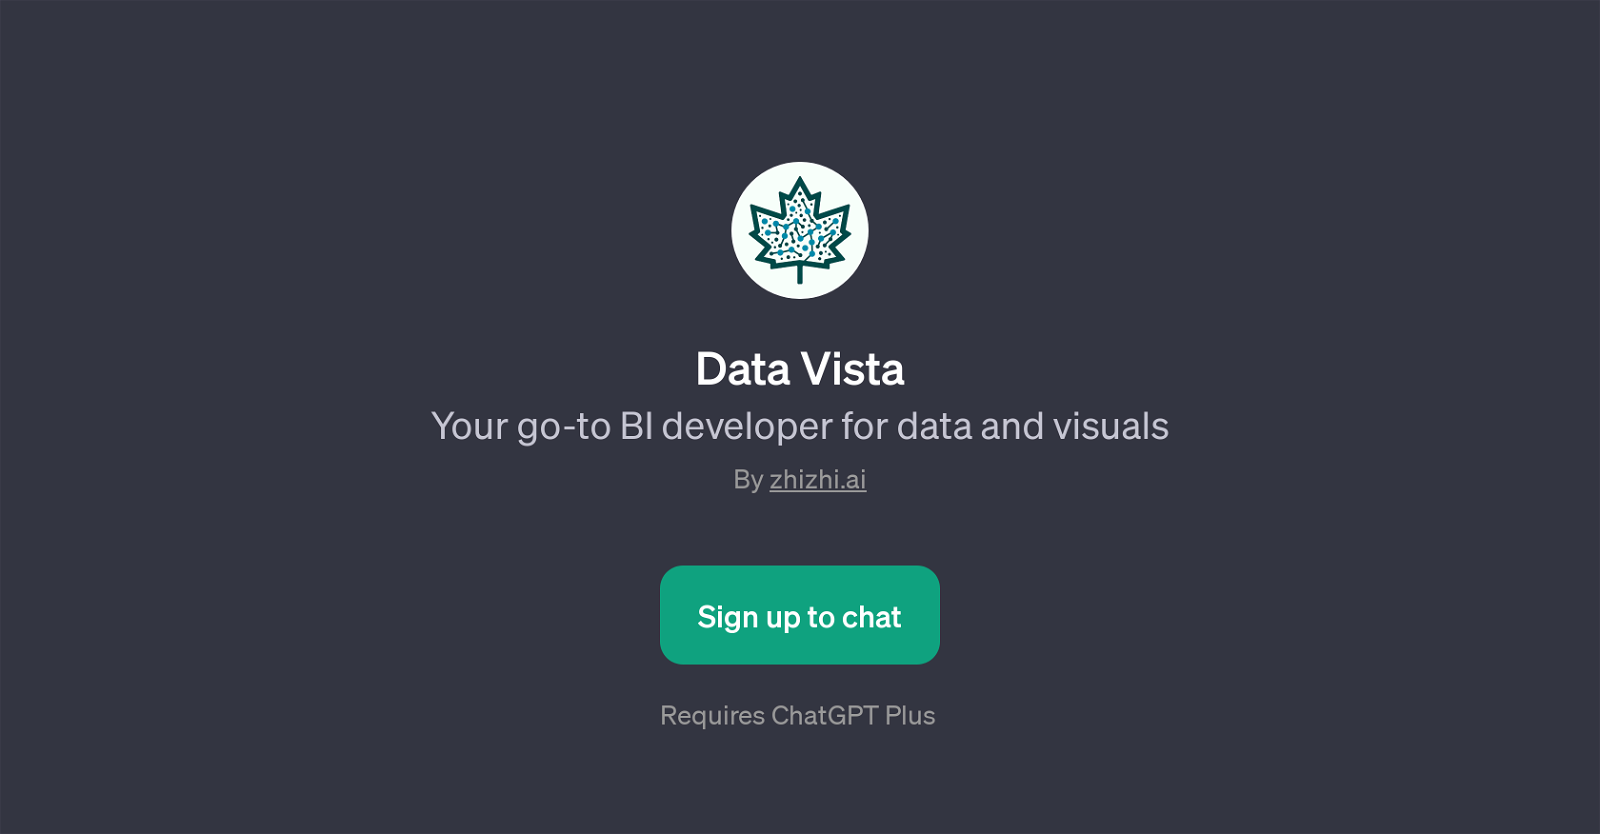 Data Vista website